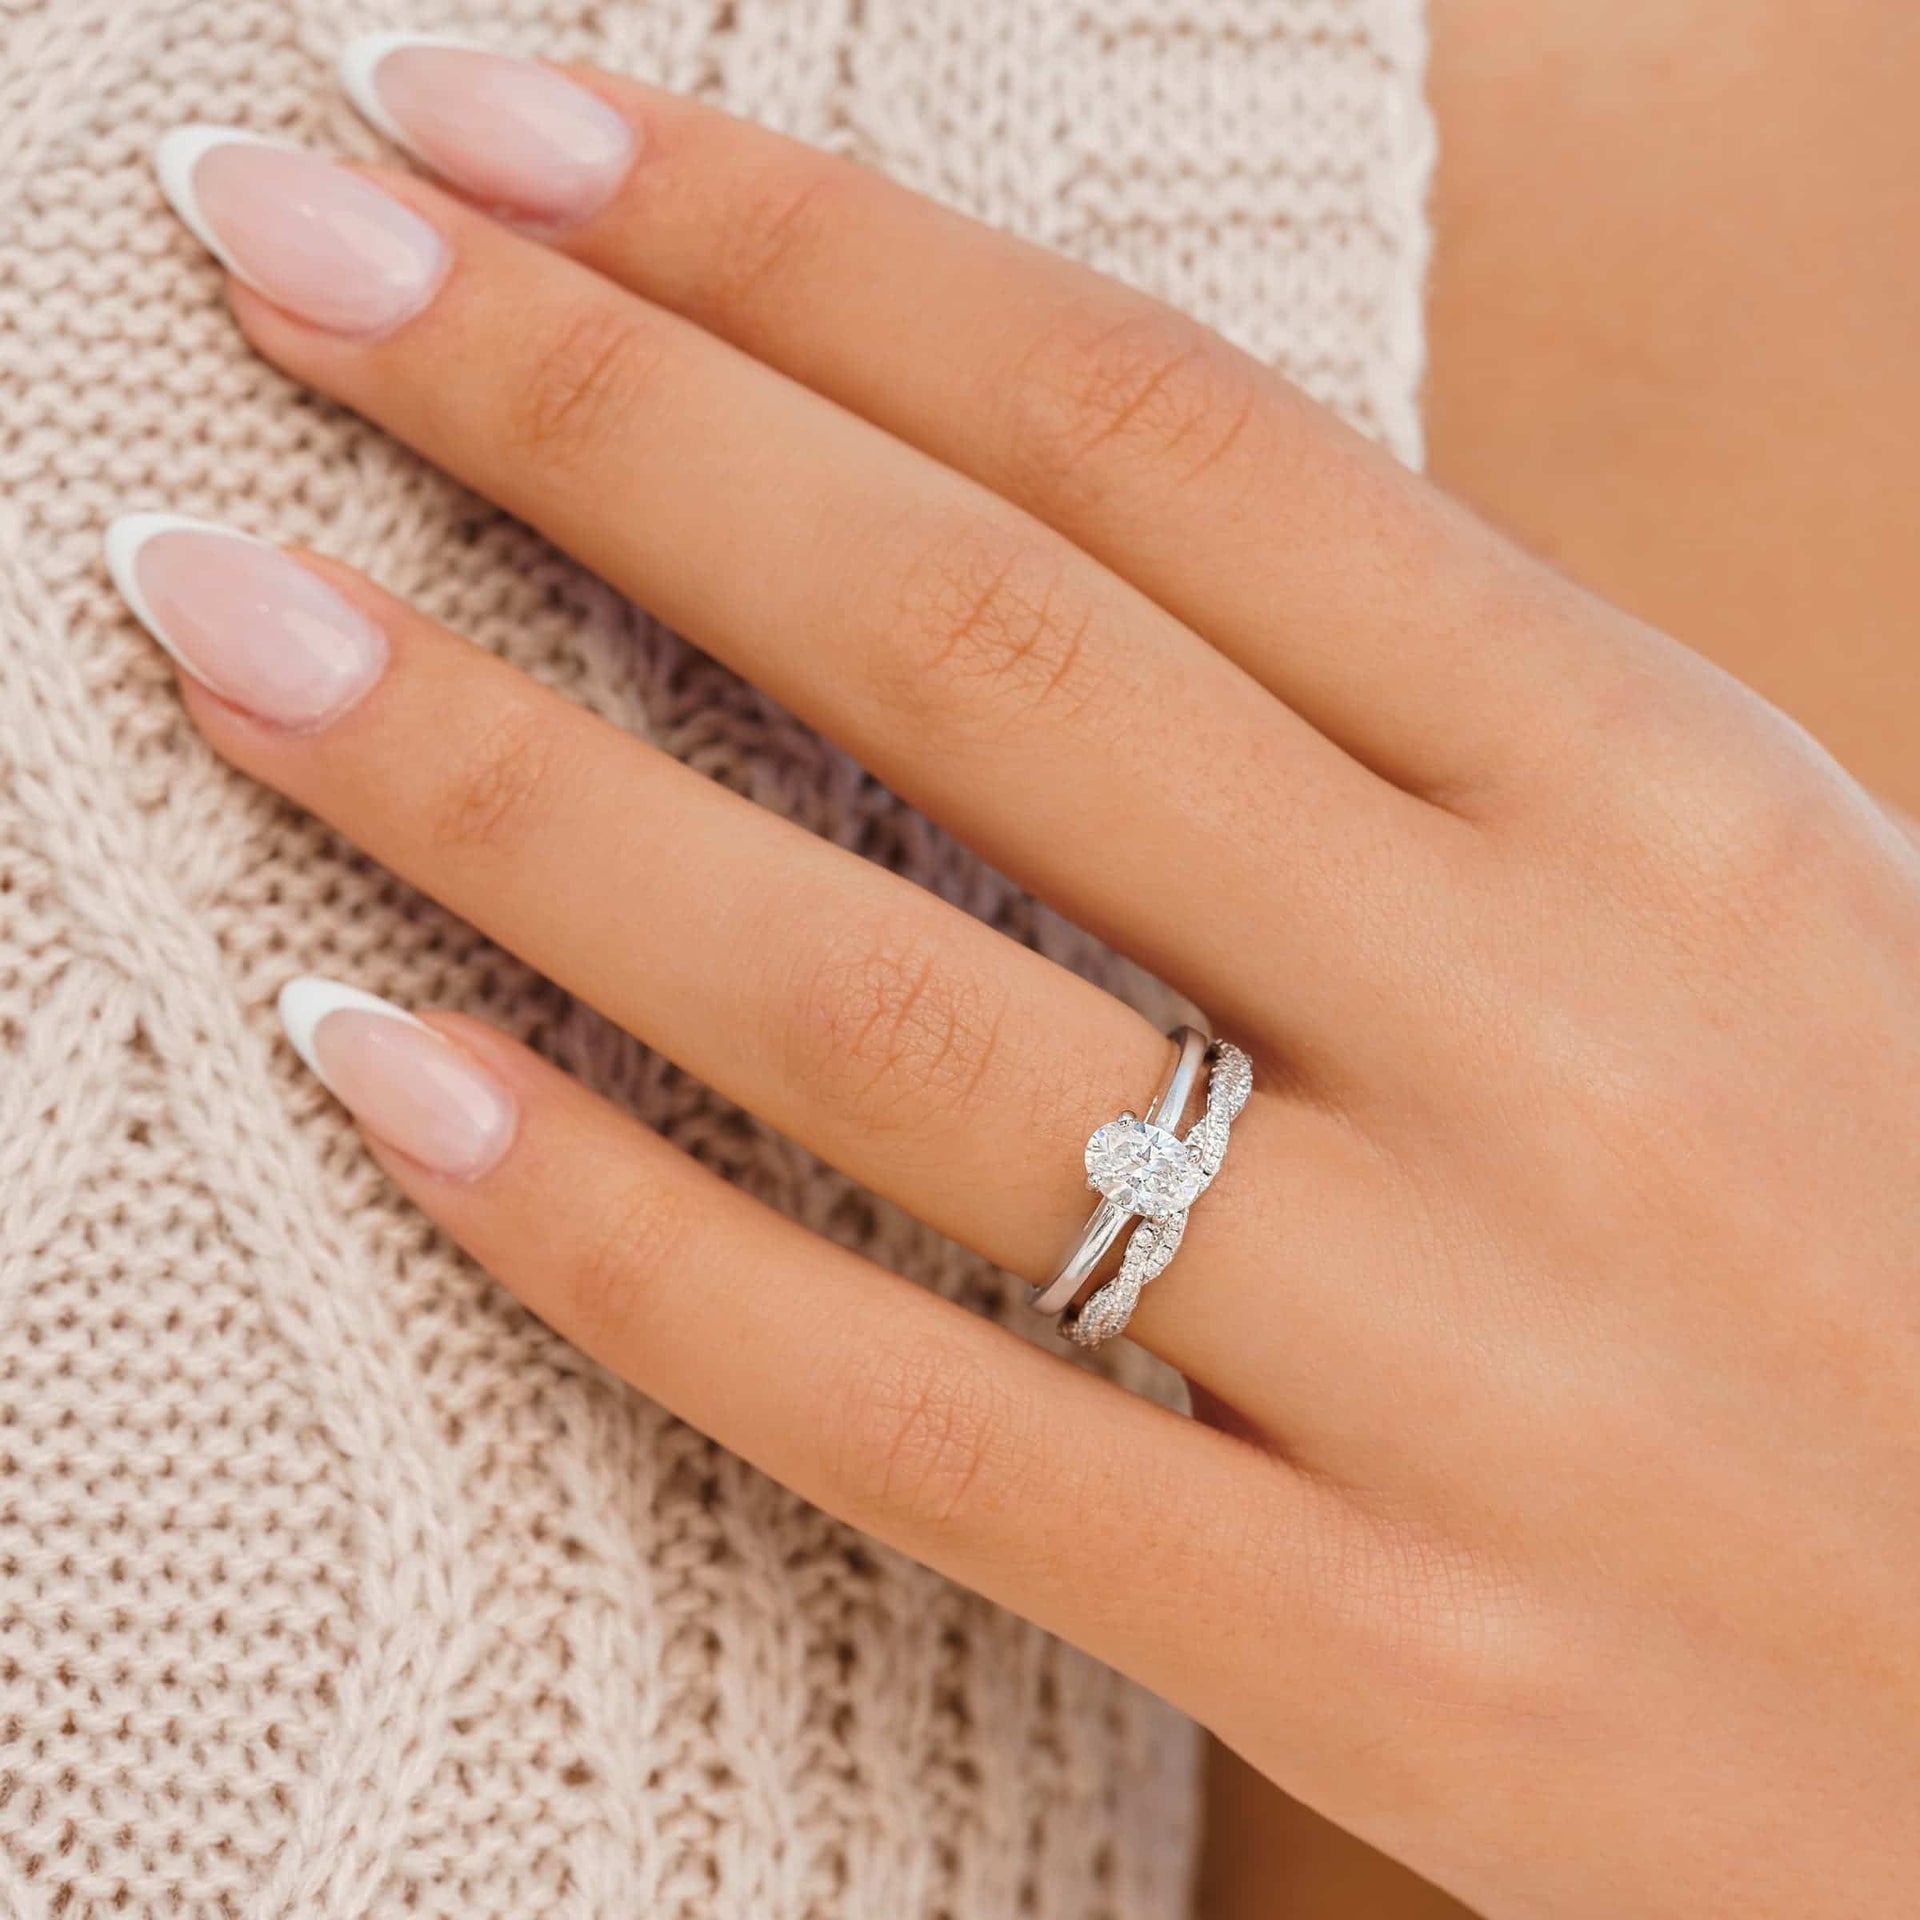 petite engagement ring on ladies hand